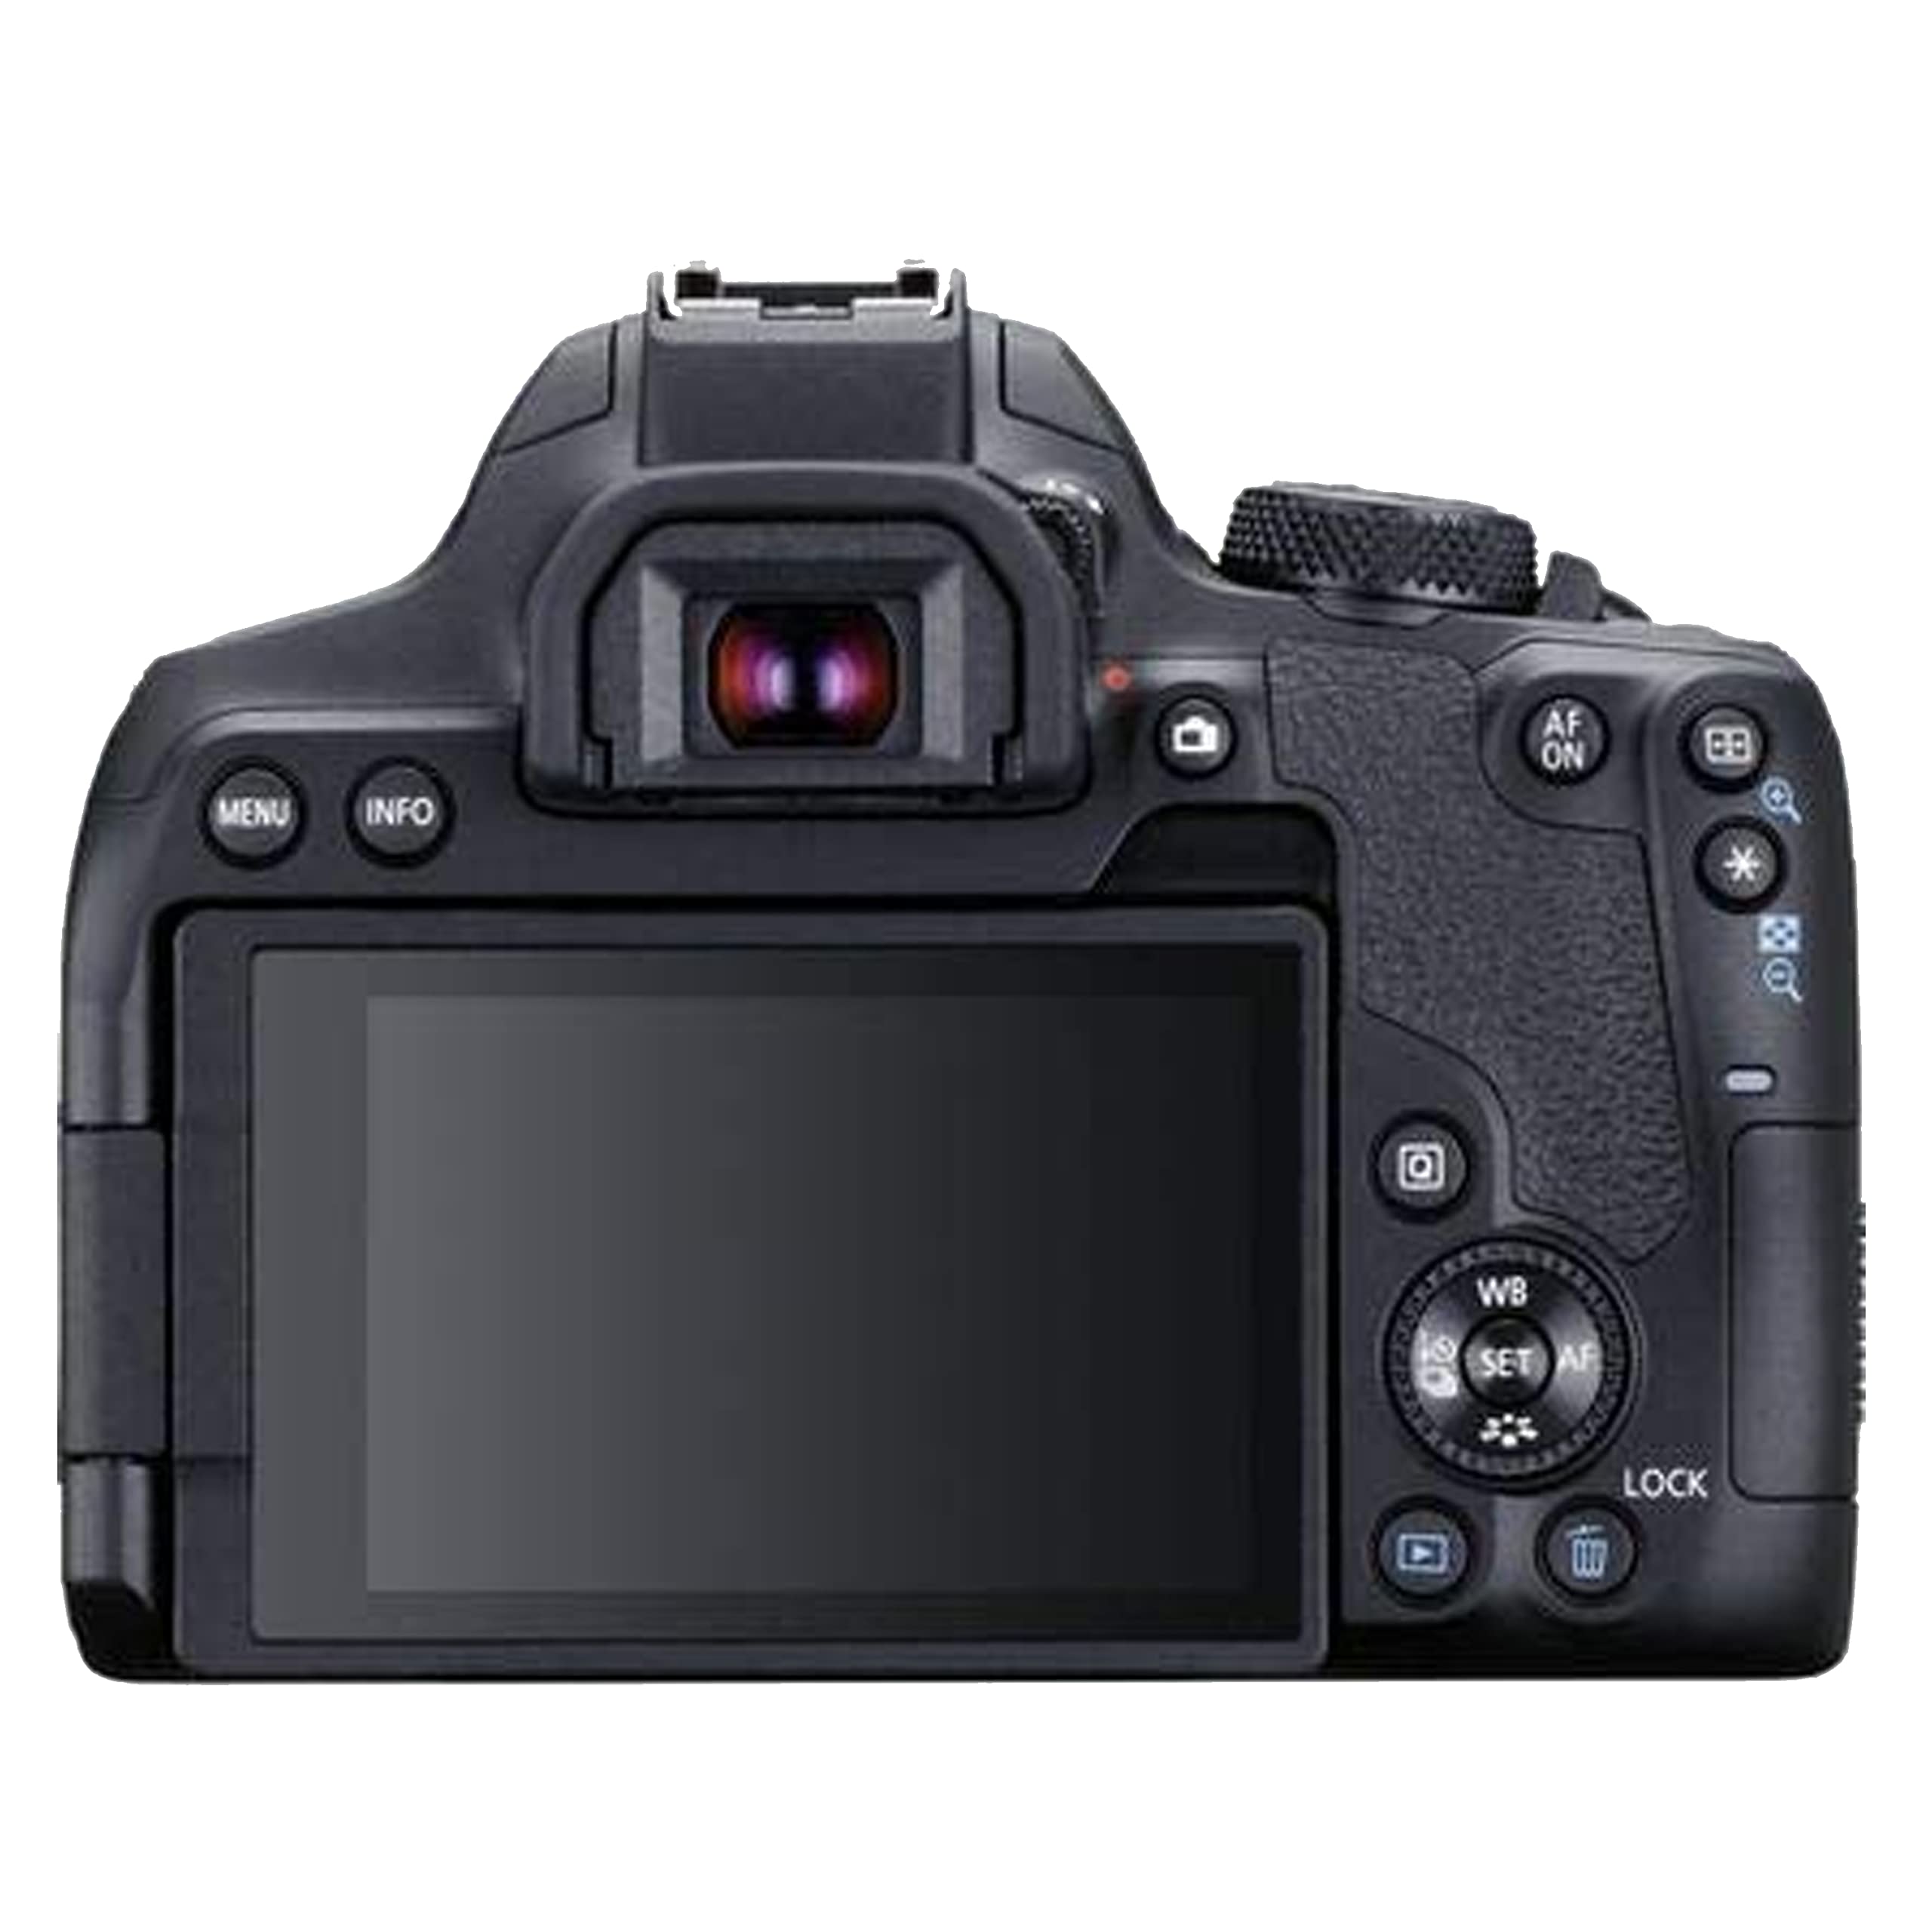 Canon EOS 850D (Rebel T8i) DSLR Camera w/EF-S 18-55mm F/4-5.6 is STM Lens + EF 75-300mm f/4-5.6 III Lens + 2X 64GB Memory + Case + Filters + Tripod + More (35pc Bundle)